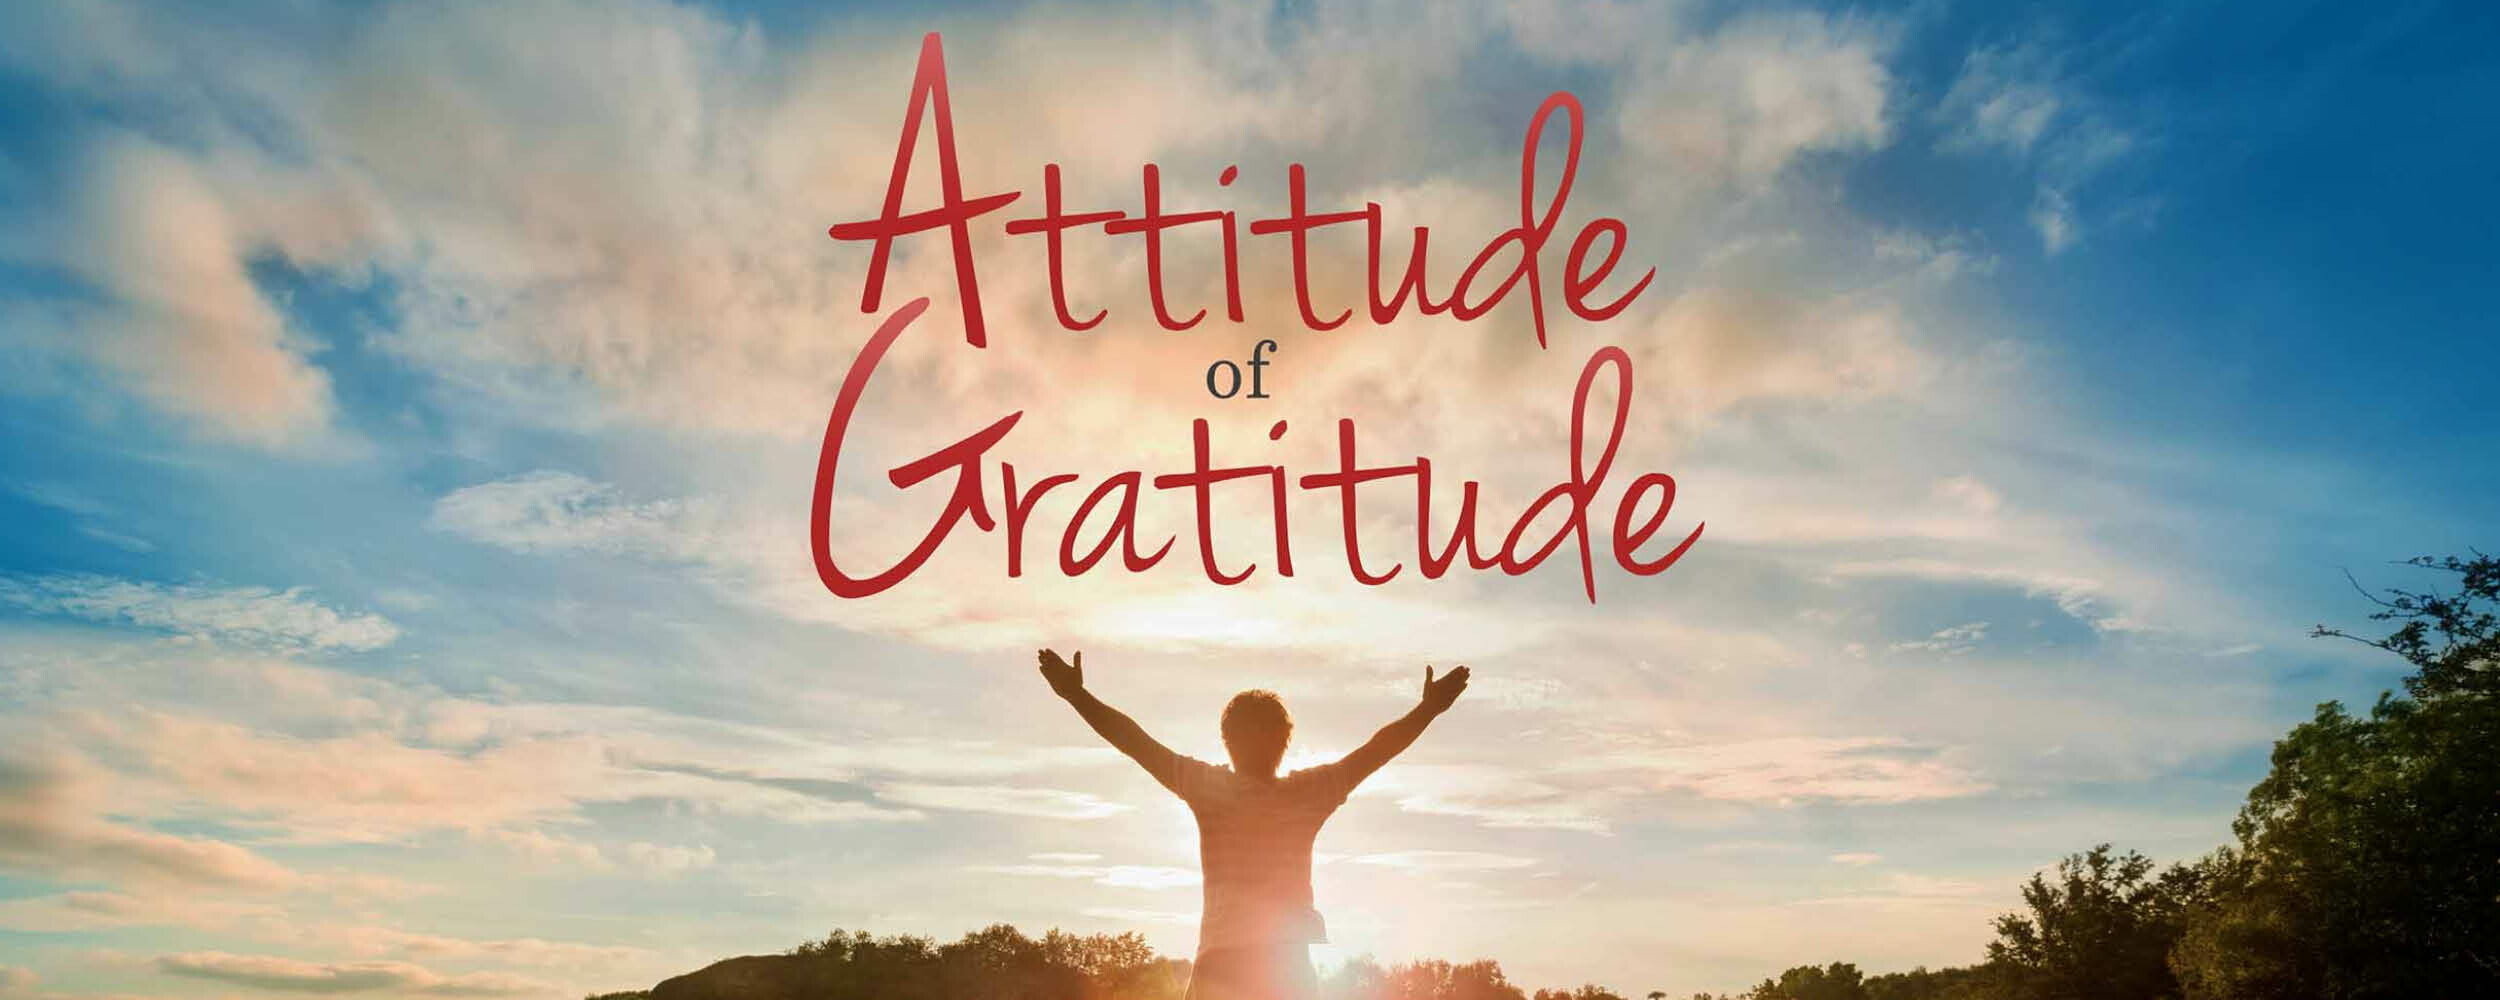 Attitude of Gratitude, Week 3